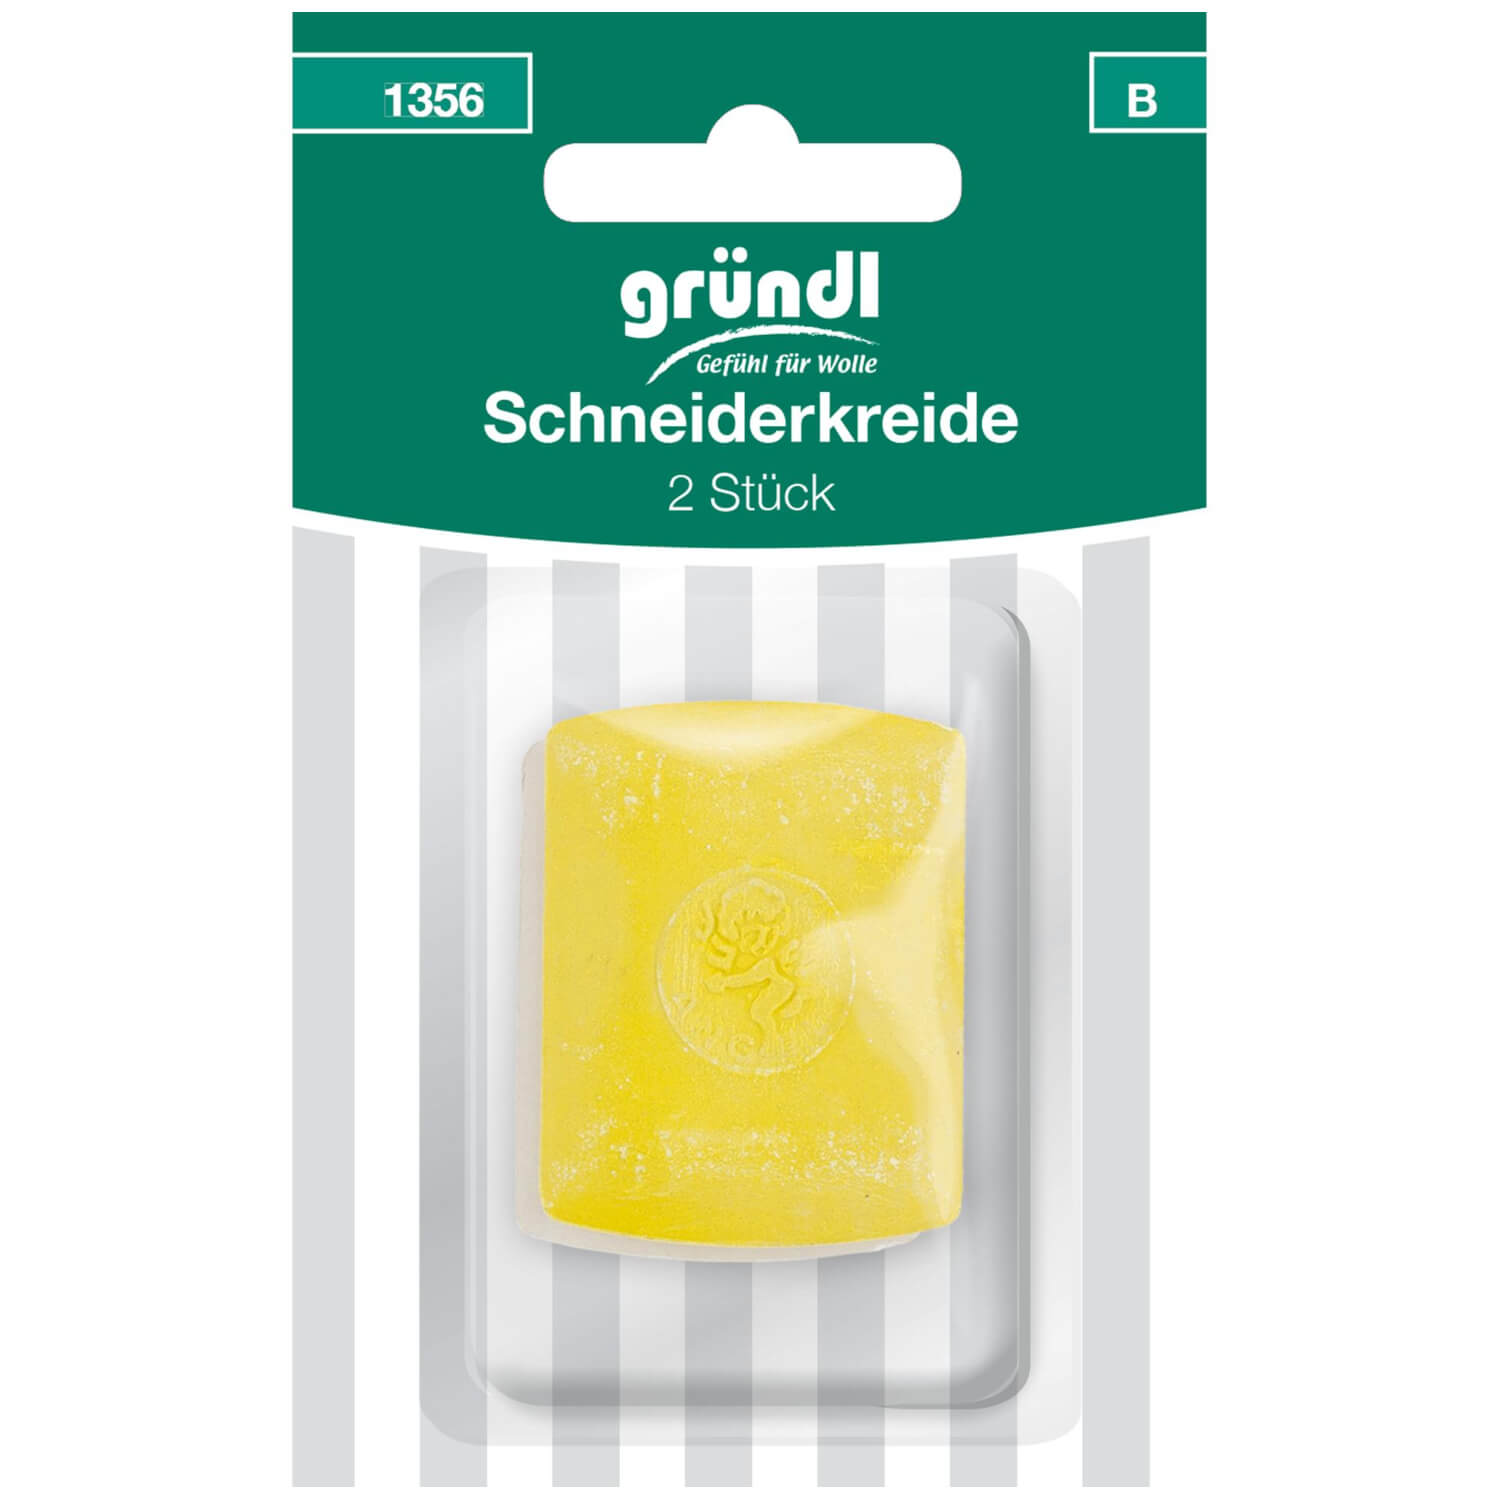 GRÜNDL | 2 Stück Schneiderkreide weiß & gelb (1356)